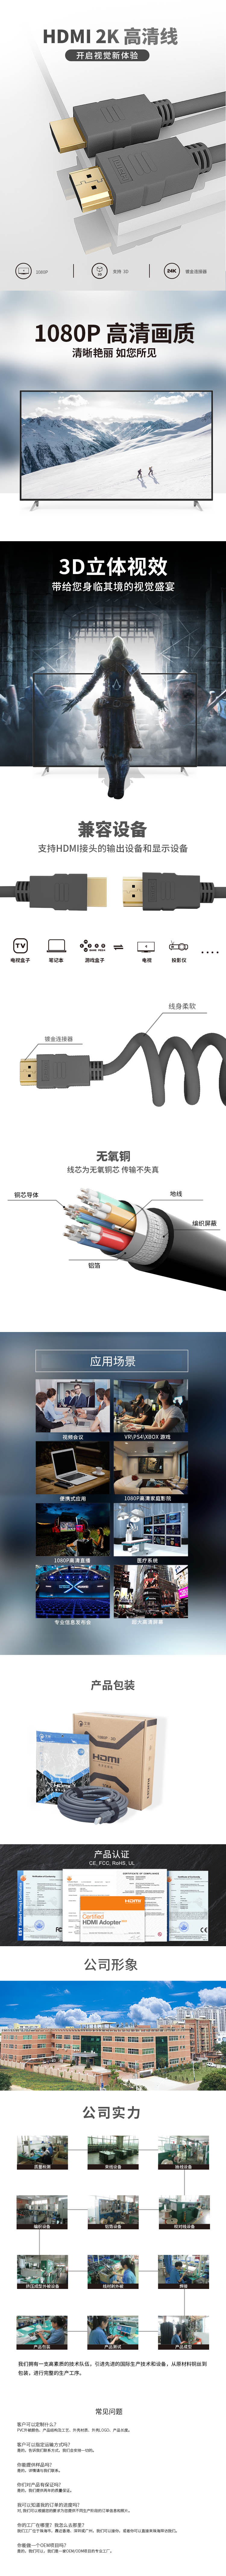 PVC HDMI 1.4中文.jpg